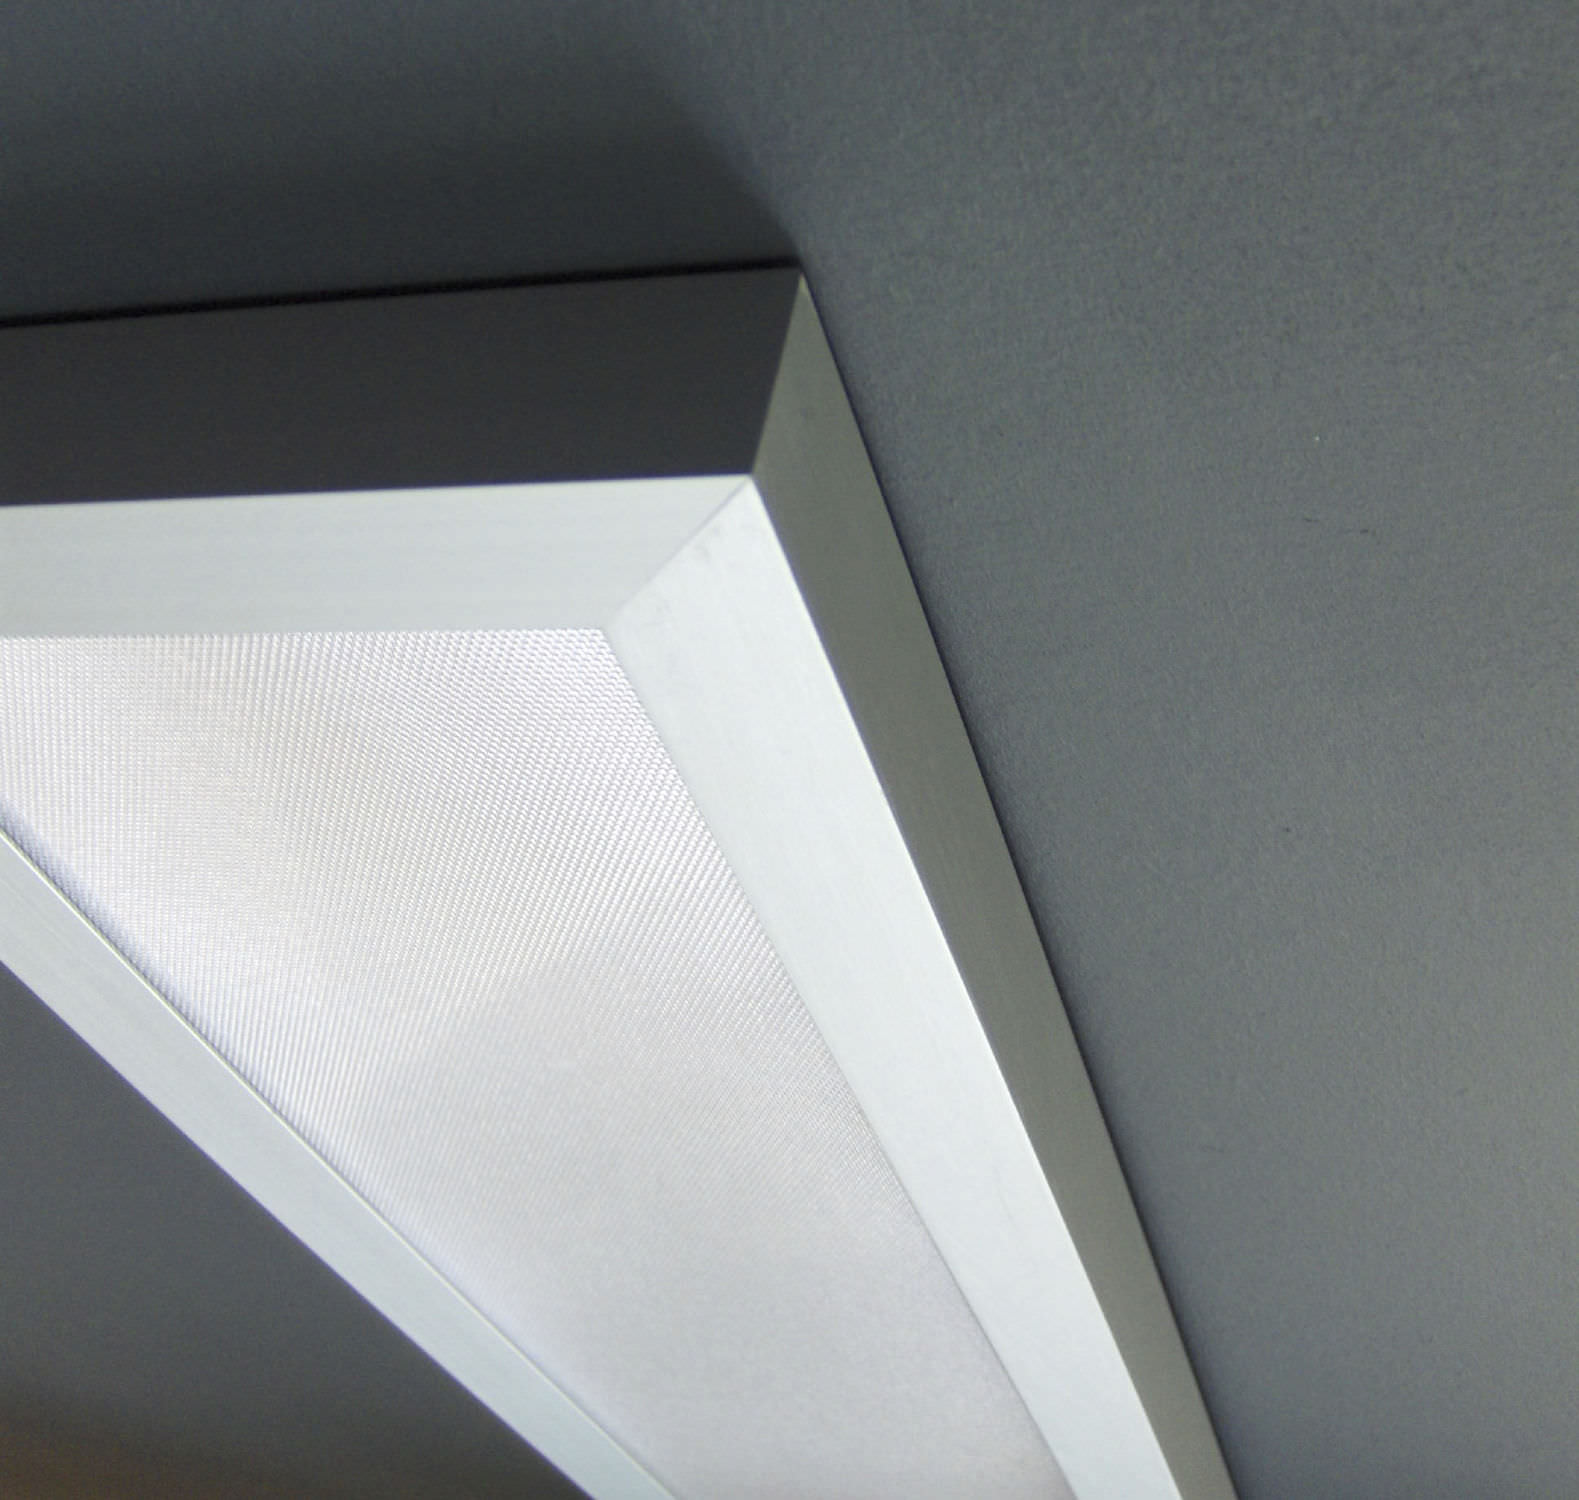 Flat ceiling lights - 10 tips for choosing | Warisan Lighting